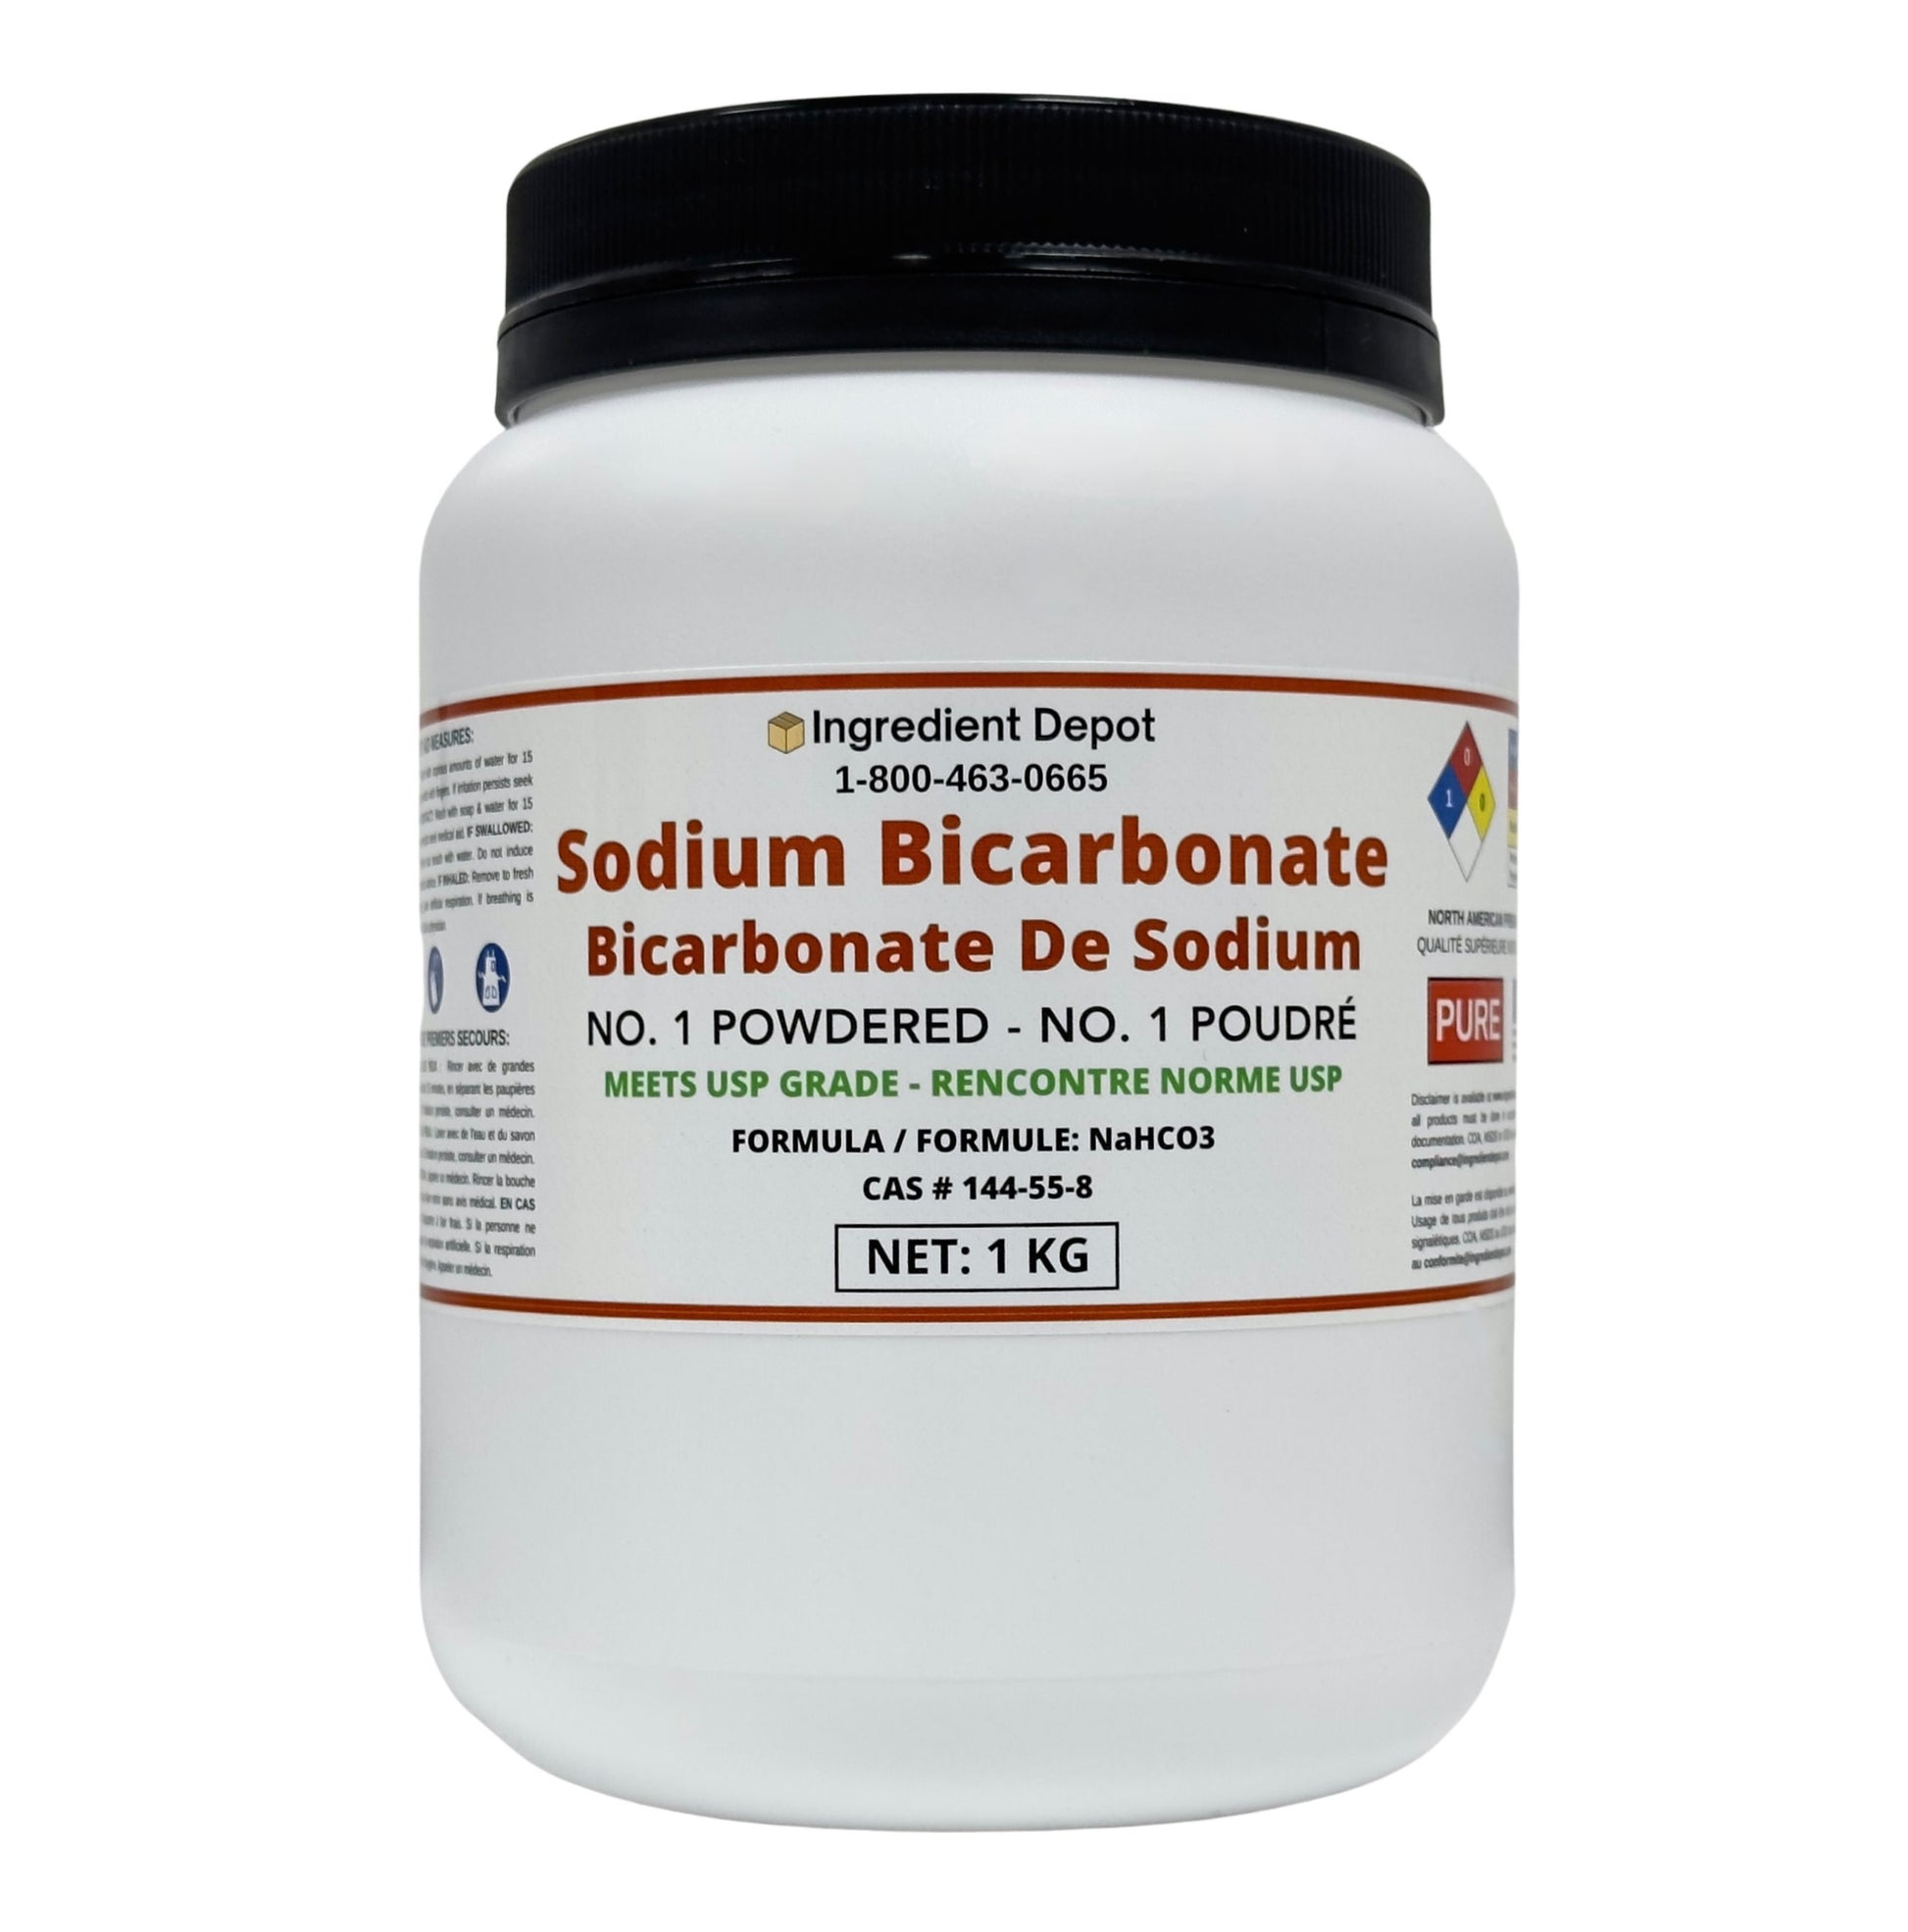 Sodium Bicarbonate No. 1 Powdered, USP Grade 1 kg - IngredientDepot.com